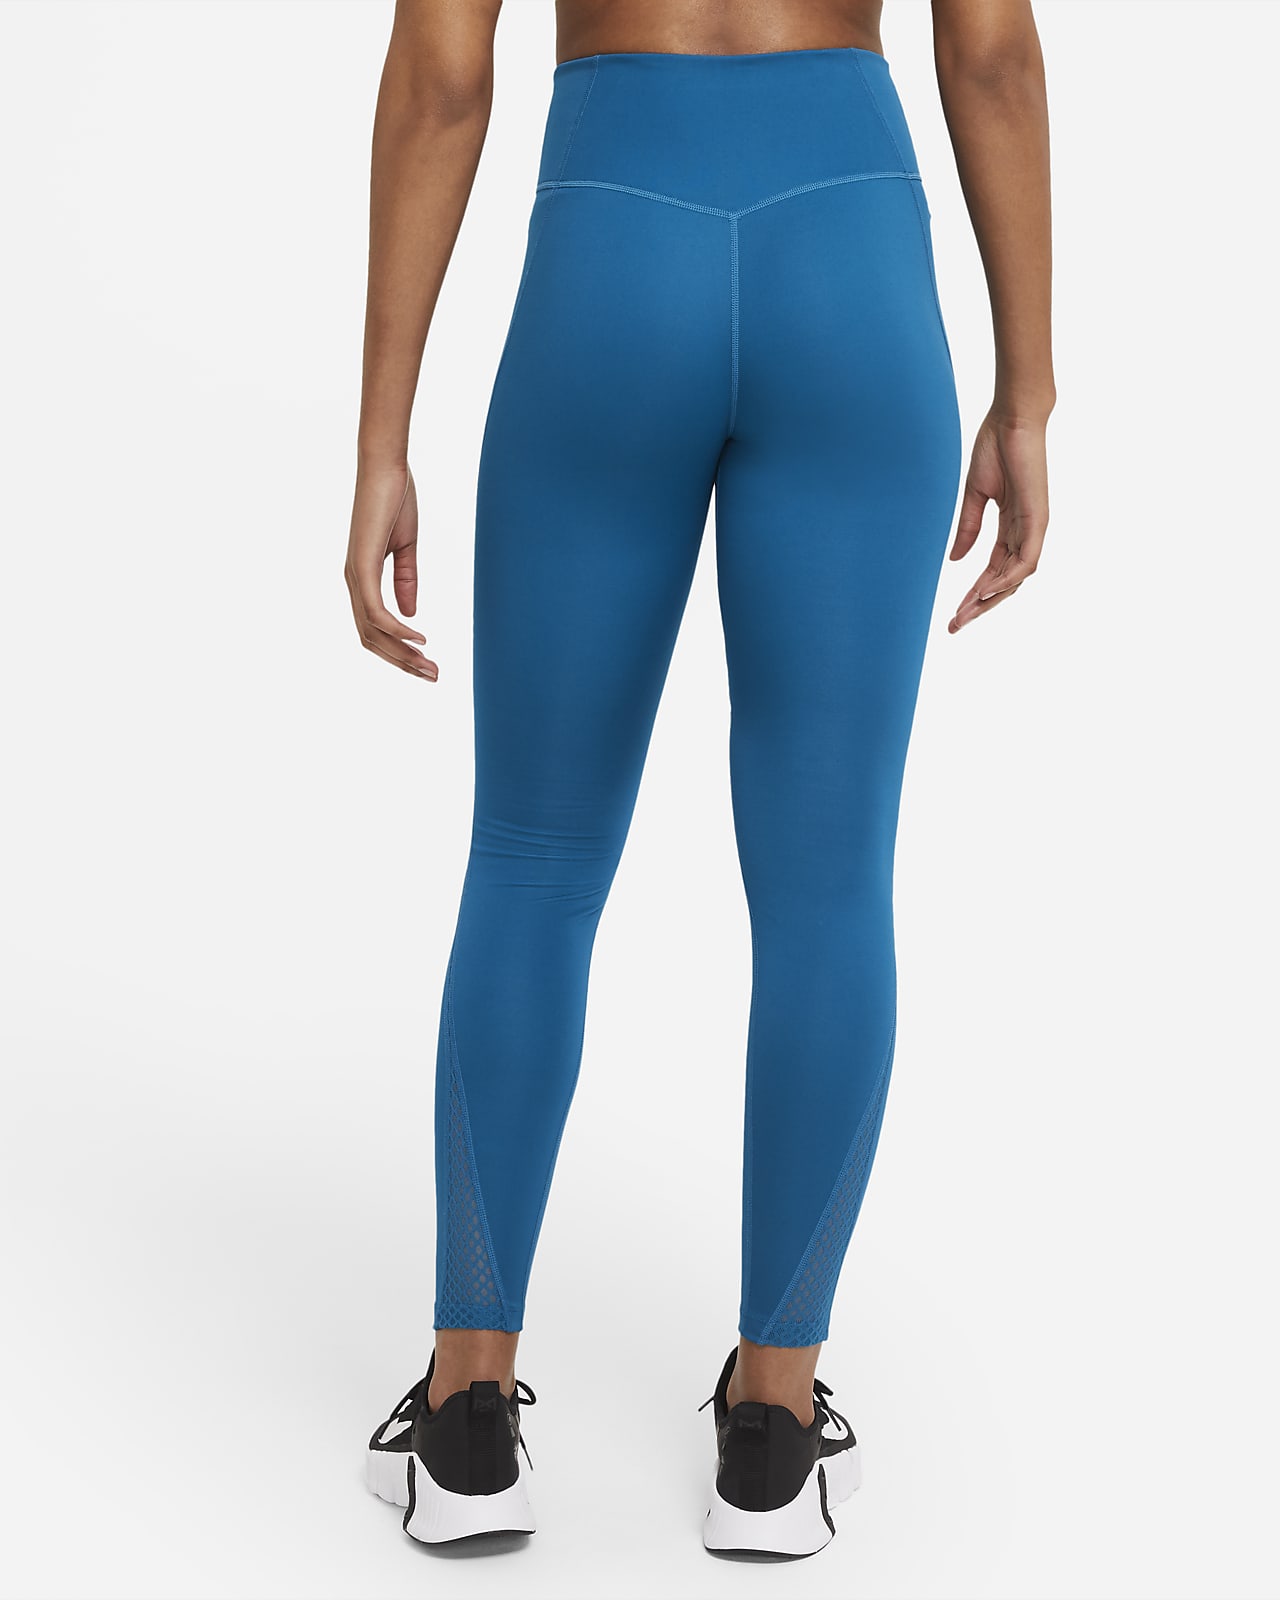 10 Minute Nike mesh workout leggings for Women